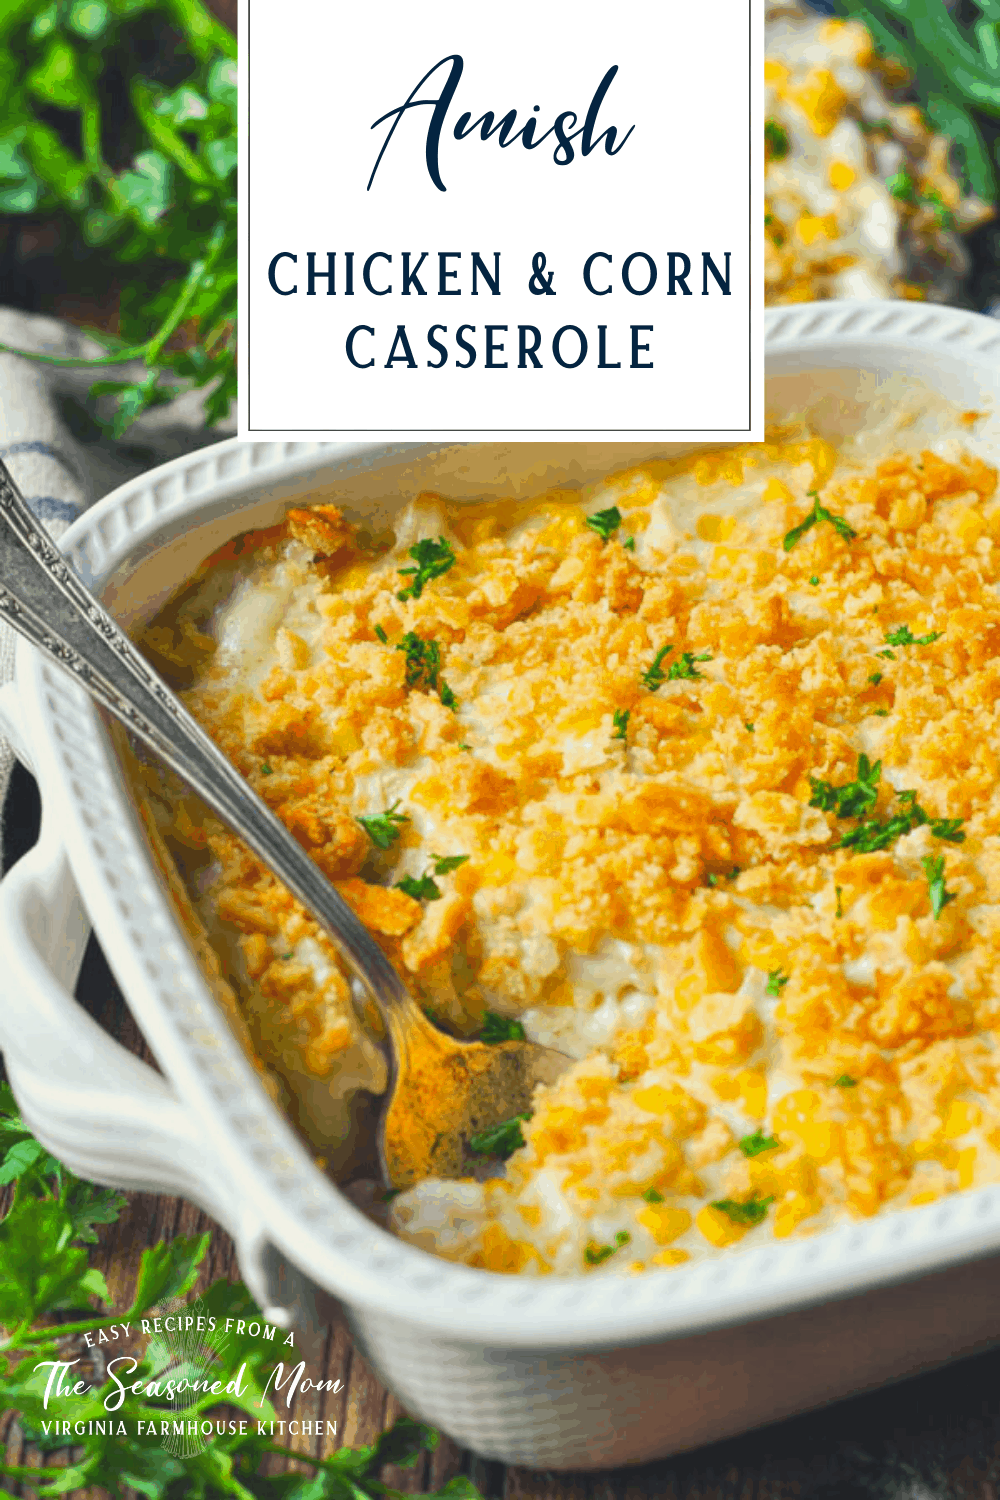 Amish Chicken and Corn Casserole - The Seasoned Mom